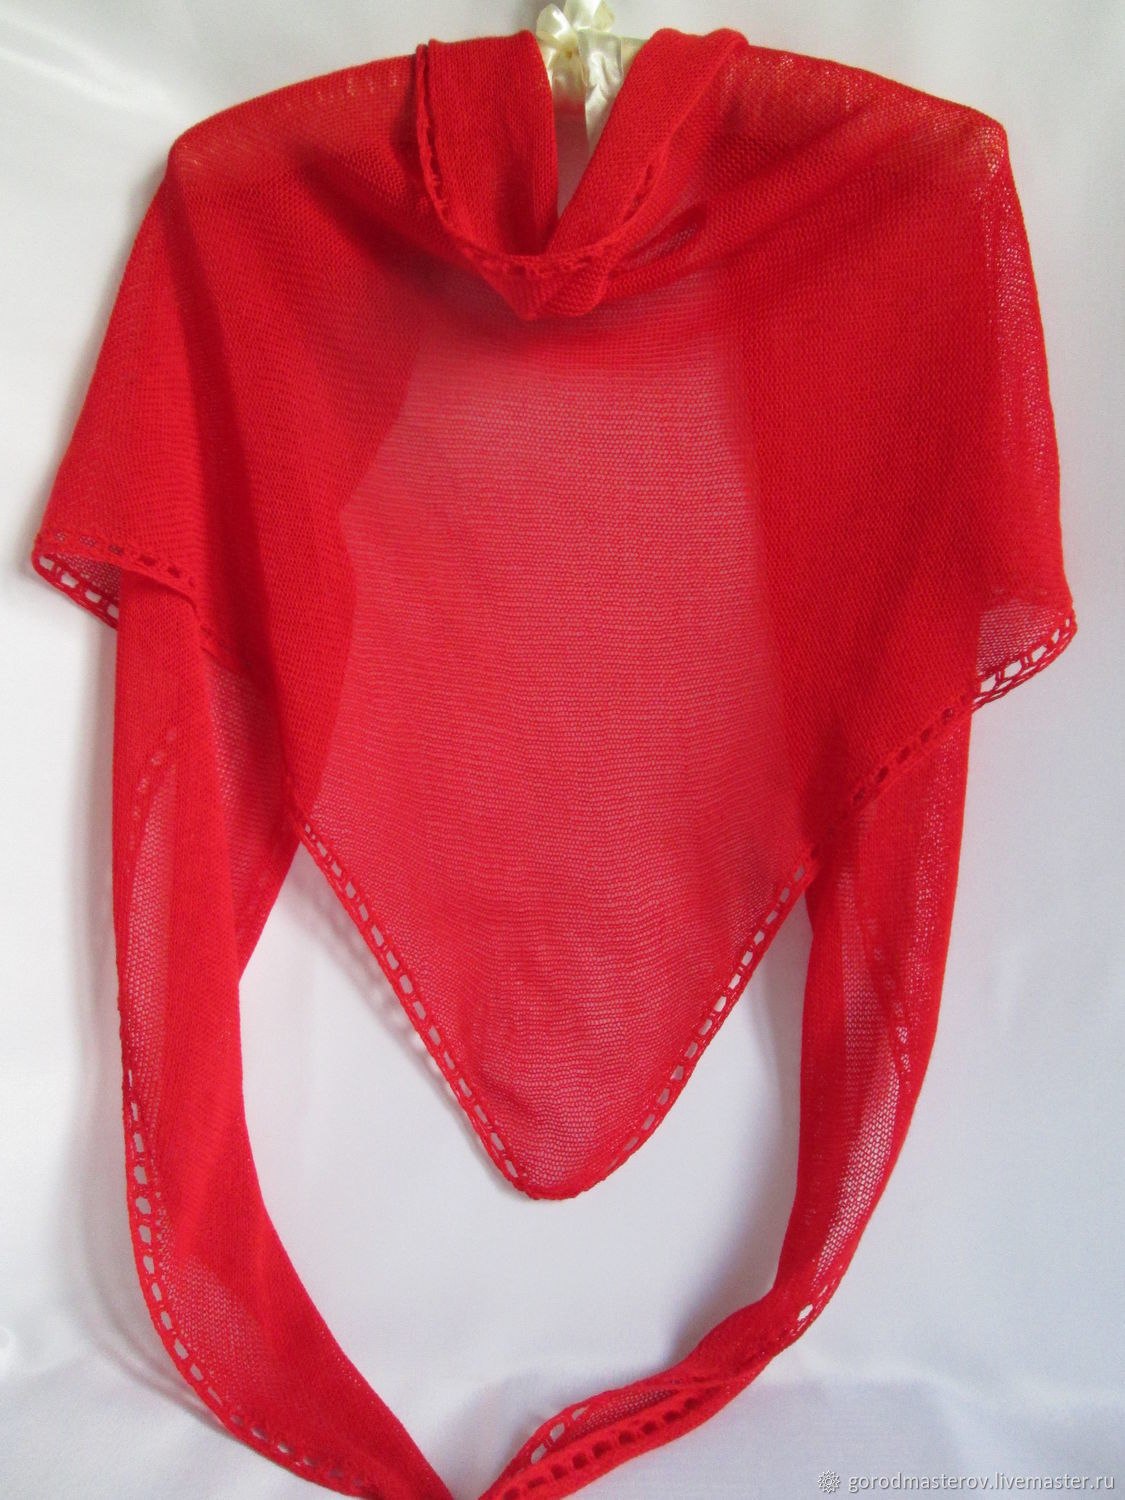 Кумачовый платок. Красная косынка. Красная шаль. Косынка из хлопка. Красный платочек.